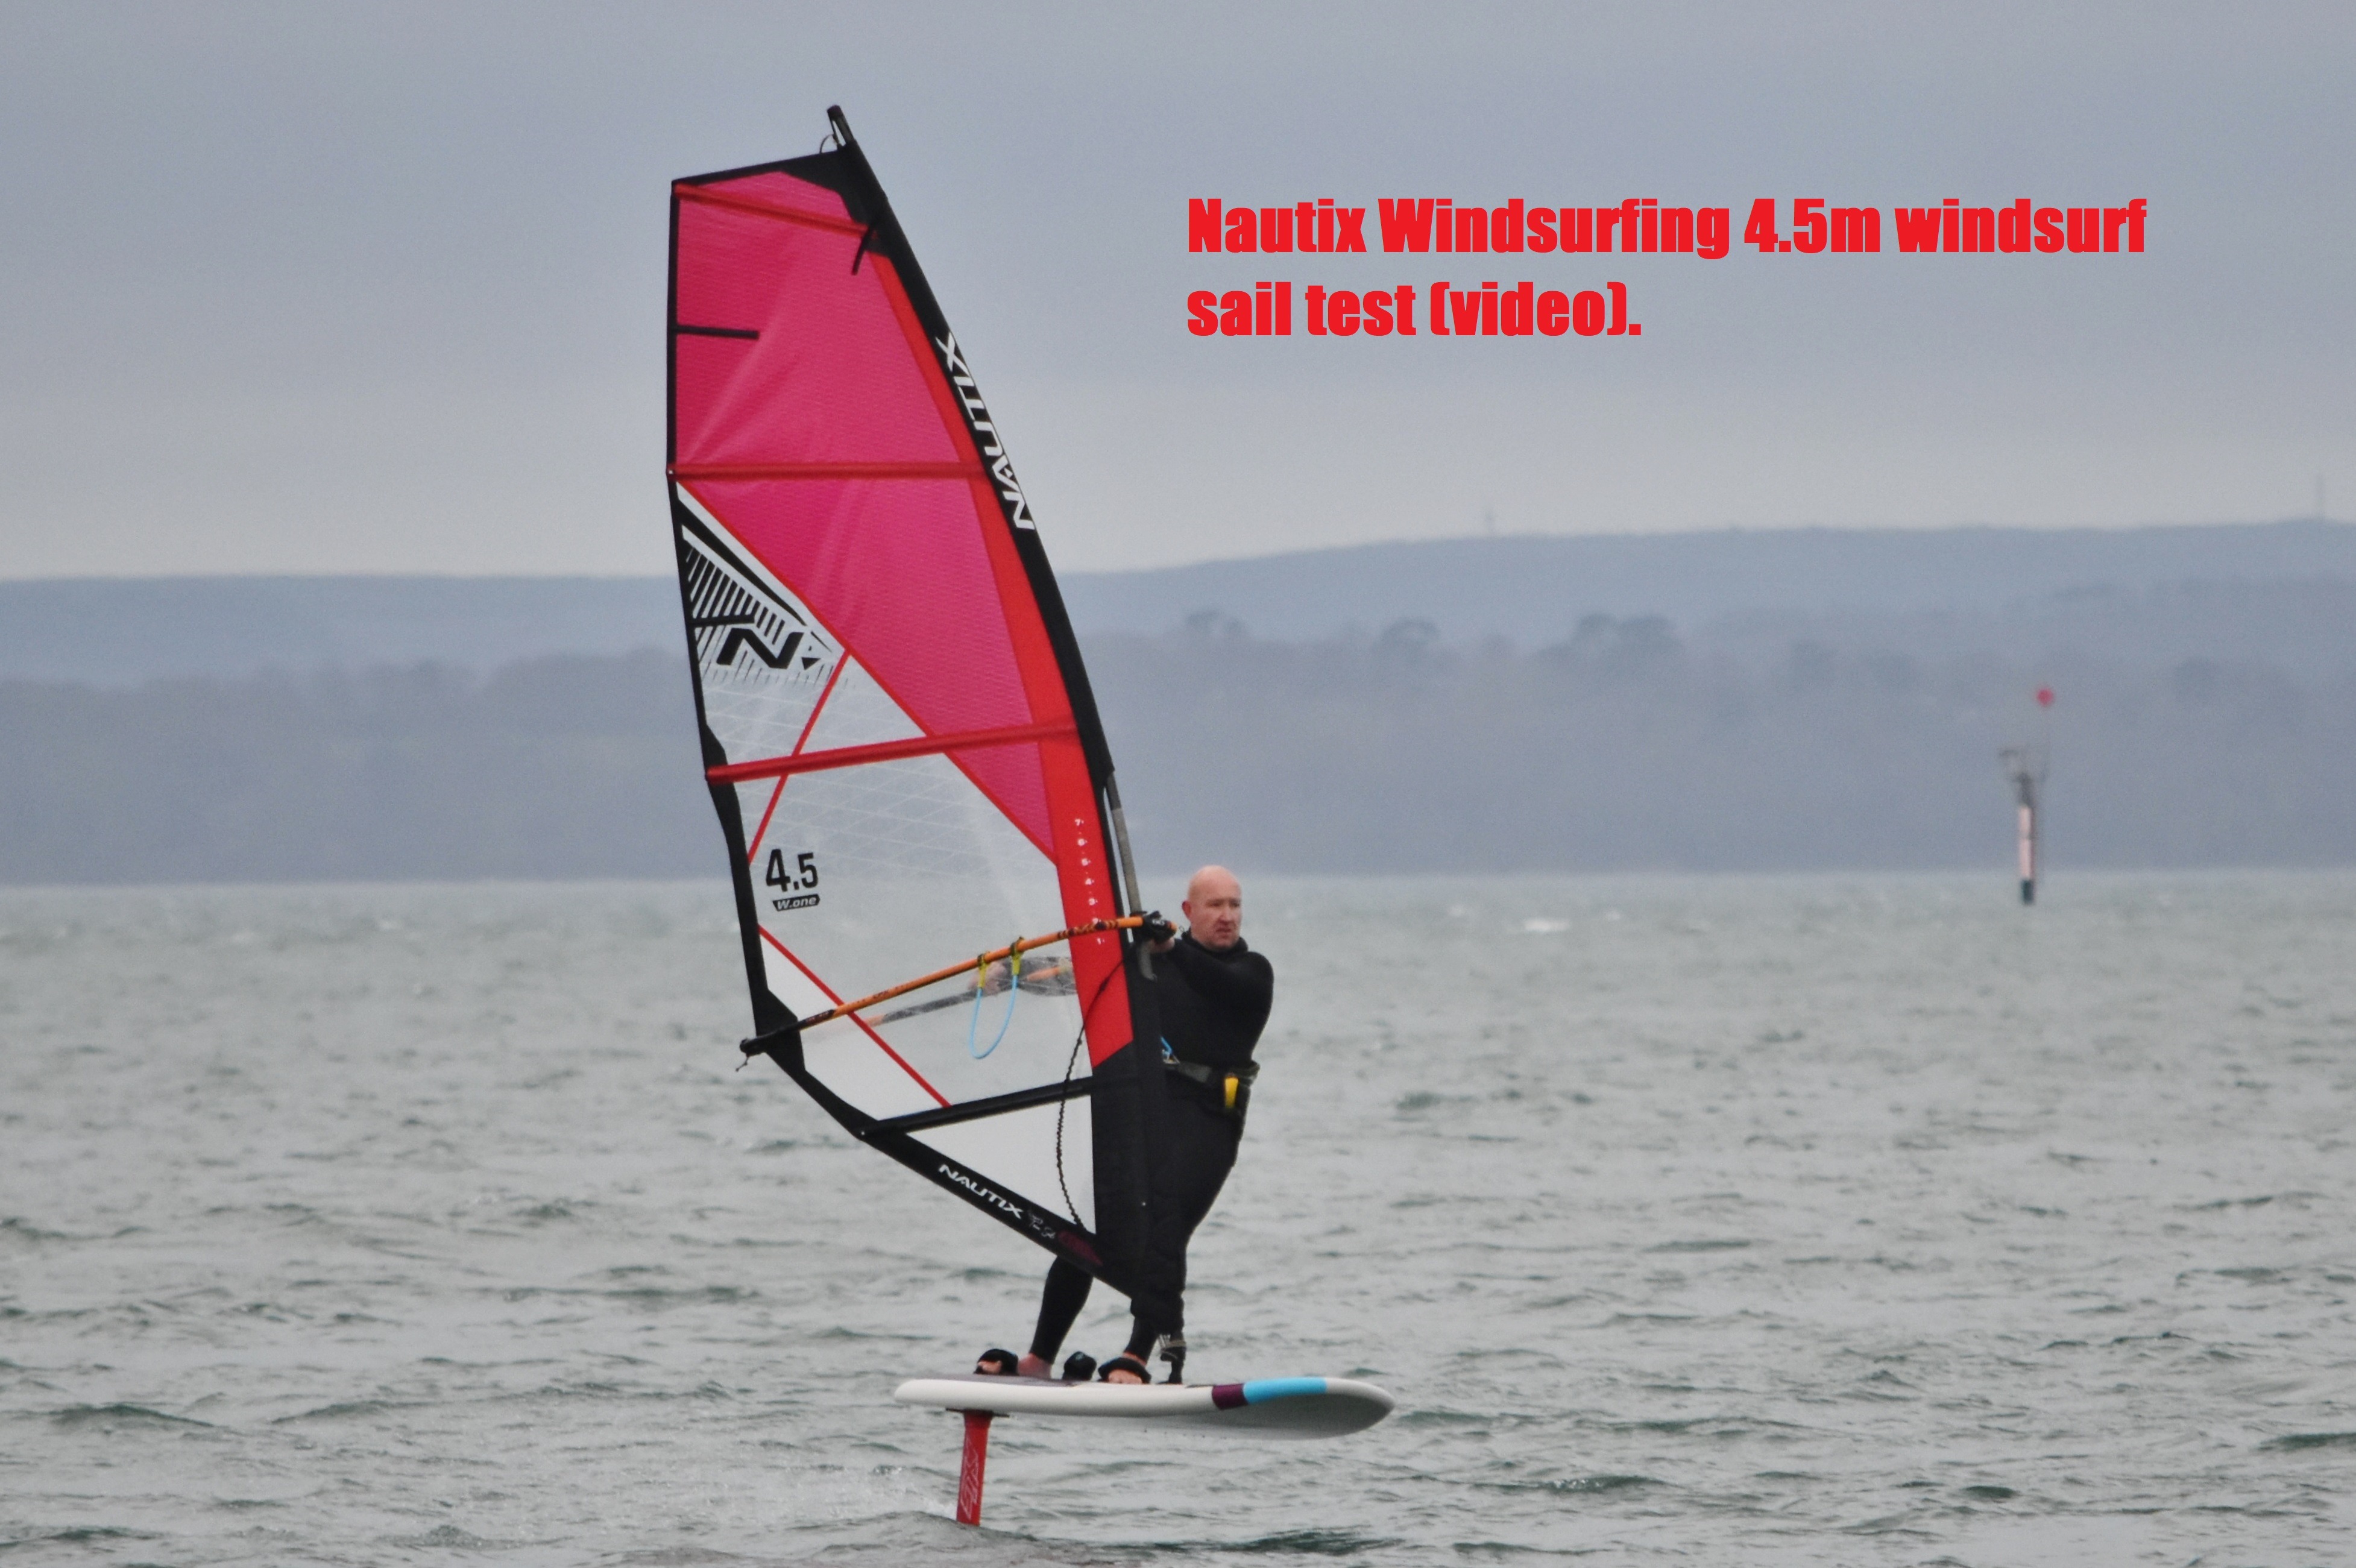 Nautix Windsurfing 4.5m windsurf sail test (video).